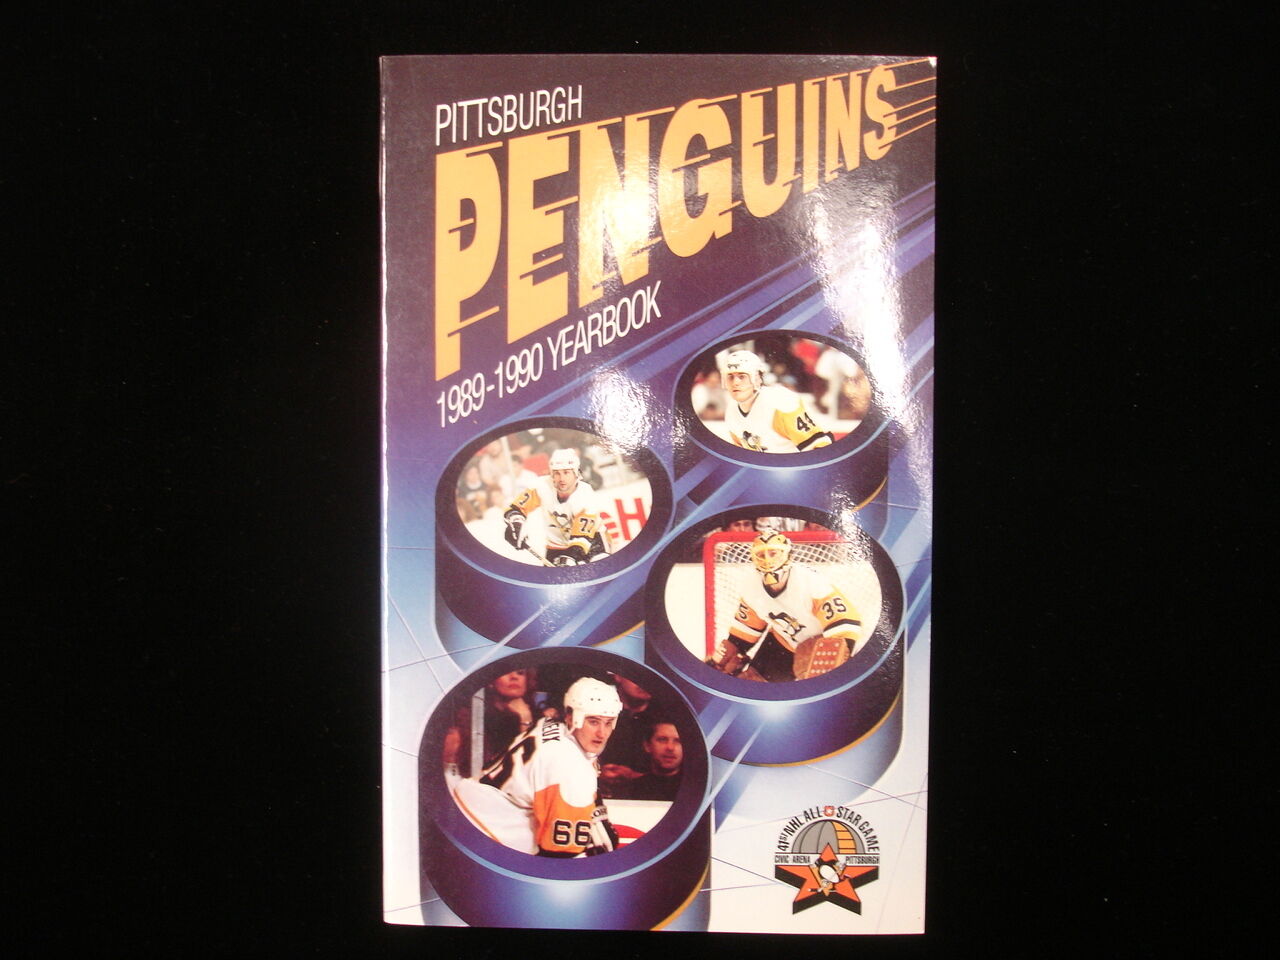 1989-90 Pittsburgh Penguins Hockey Media Guide